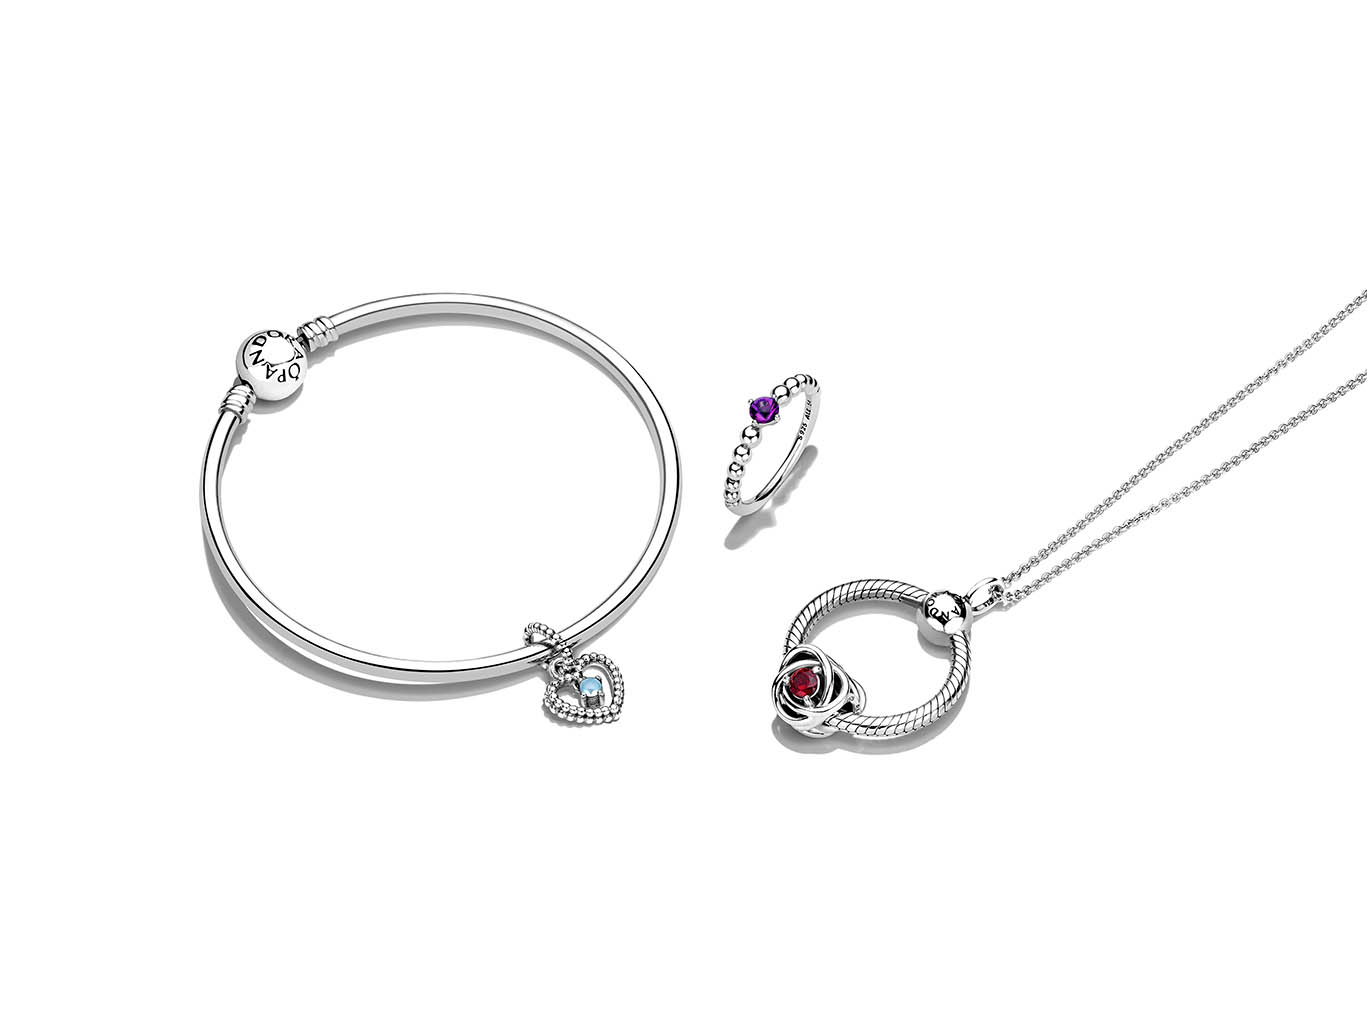 Packshot Factory - Bracelet - Pandora jewellery bracelet ring and necklace set